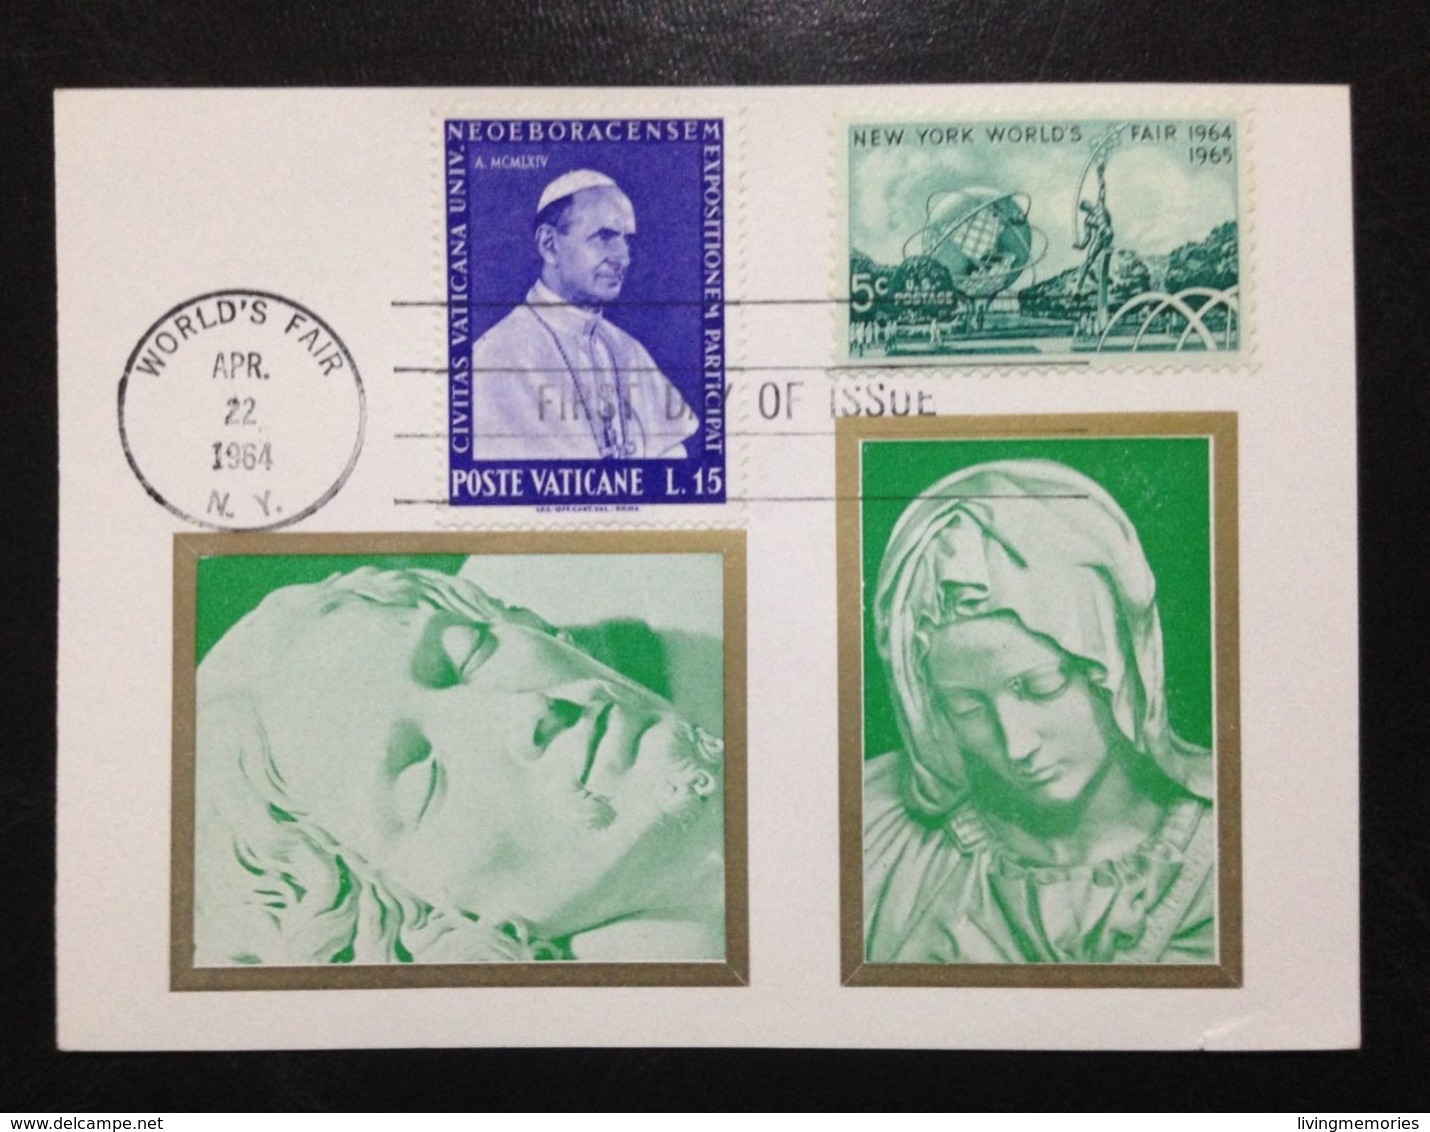 United States, Souvenir Sheet, WORLD'S FAIR NEW YORK, POPE PAUL VI, 1964 - Sheets